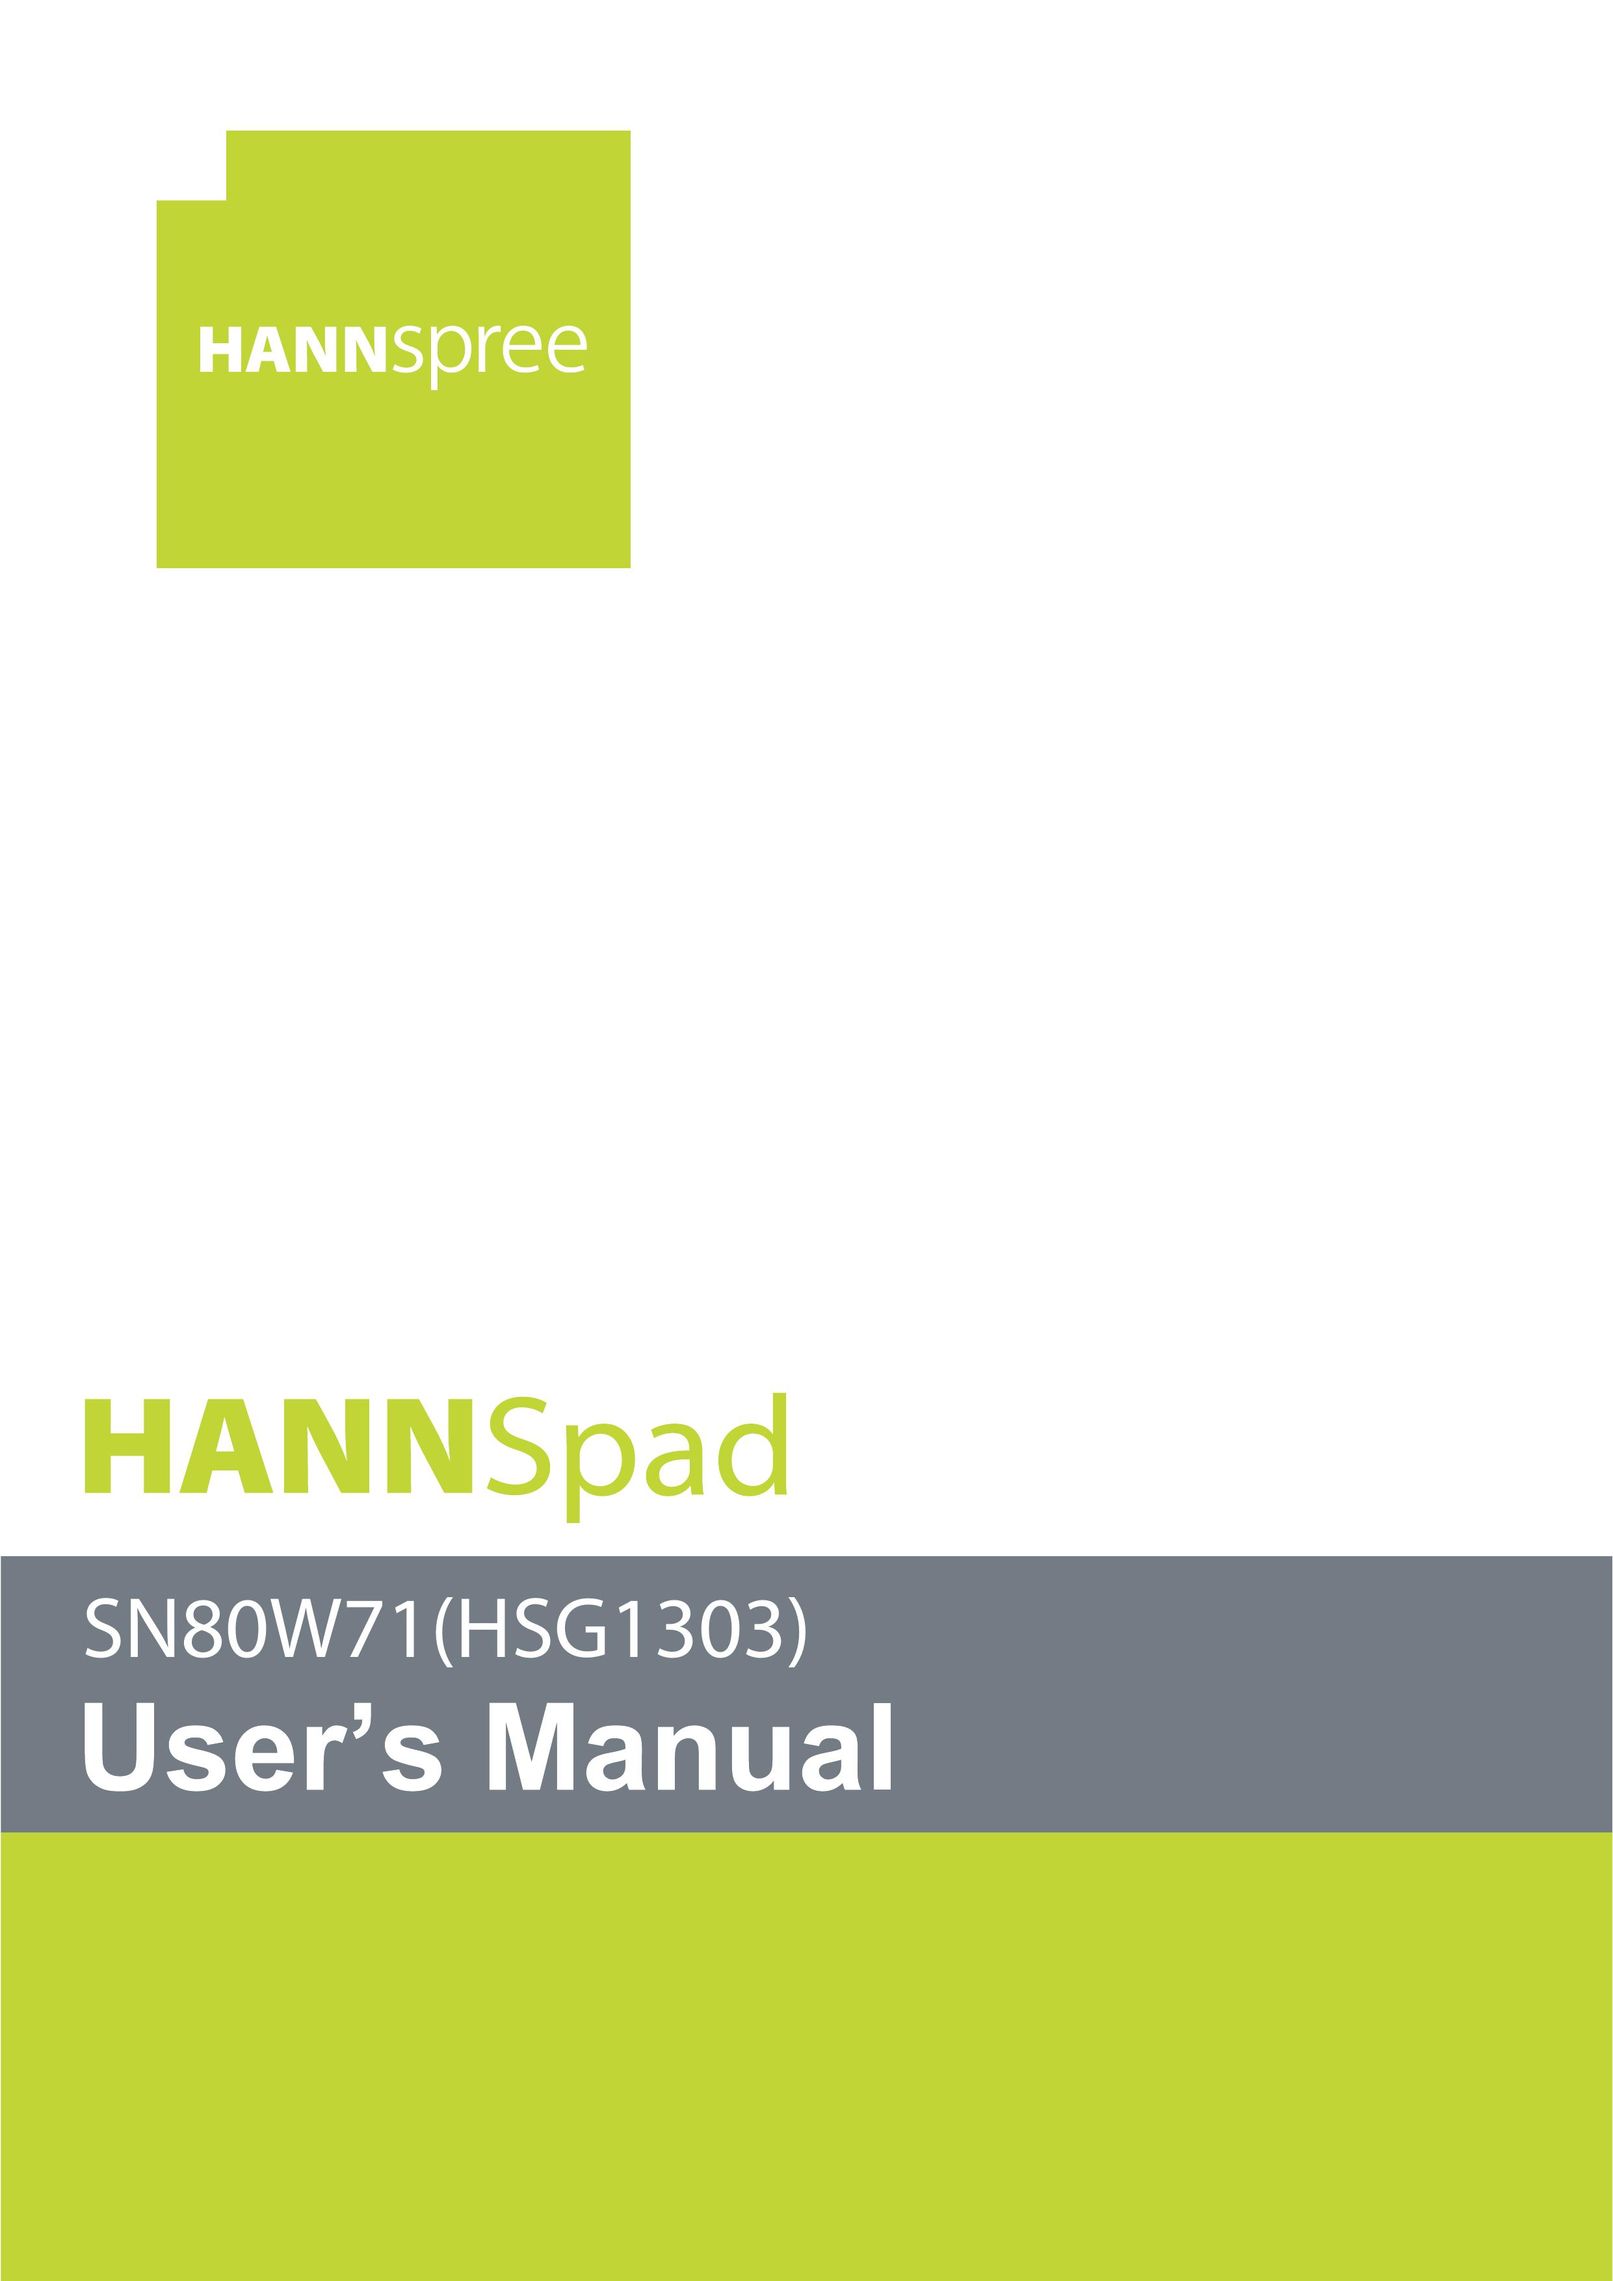 HANNspree SN80W71 Tablet Accessory User Manual